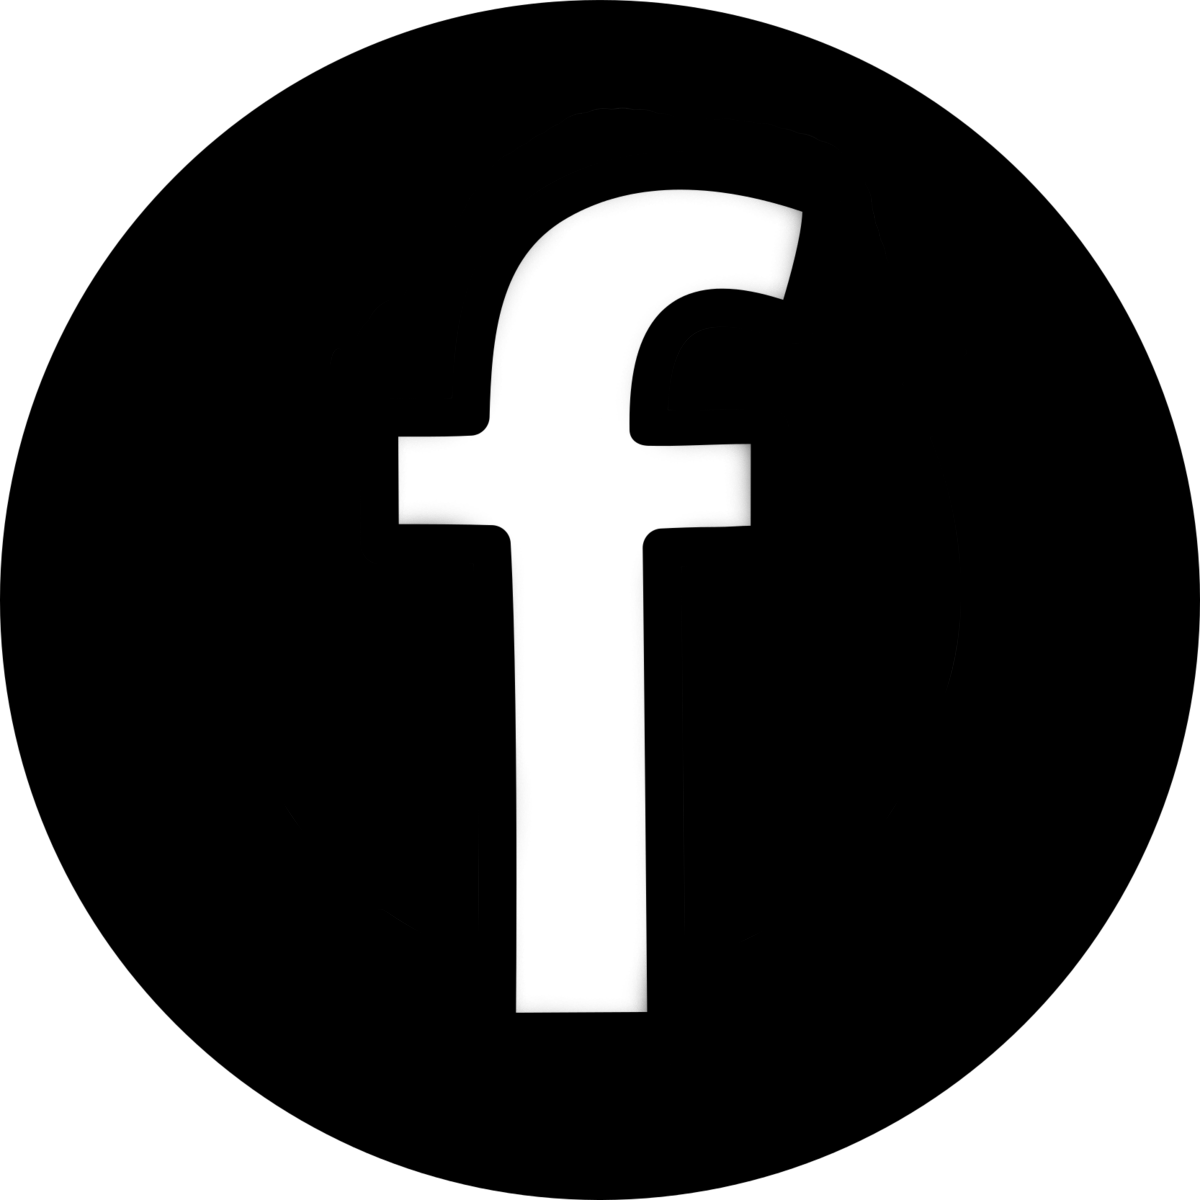 facebook logo png free download logo facebook clipart free transparent png logos facebook logo png free download logo